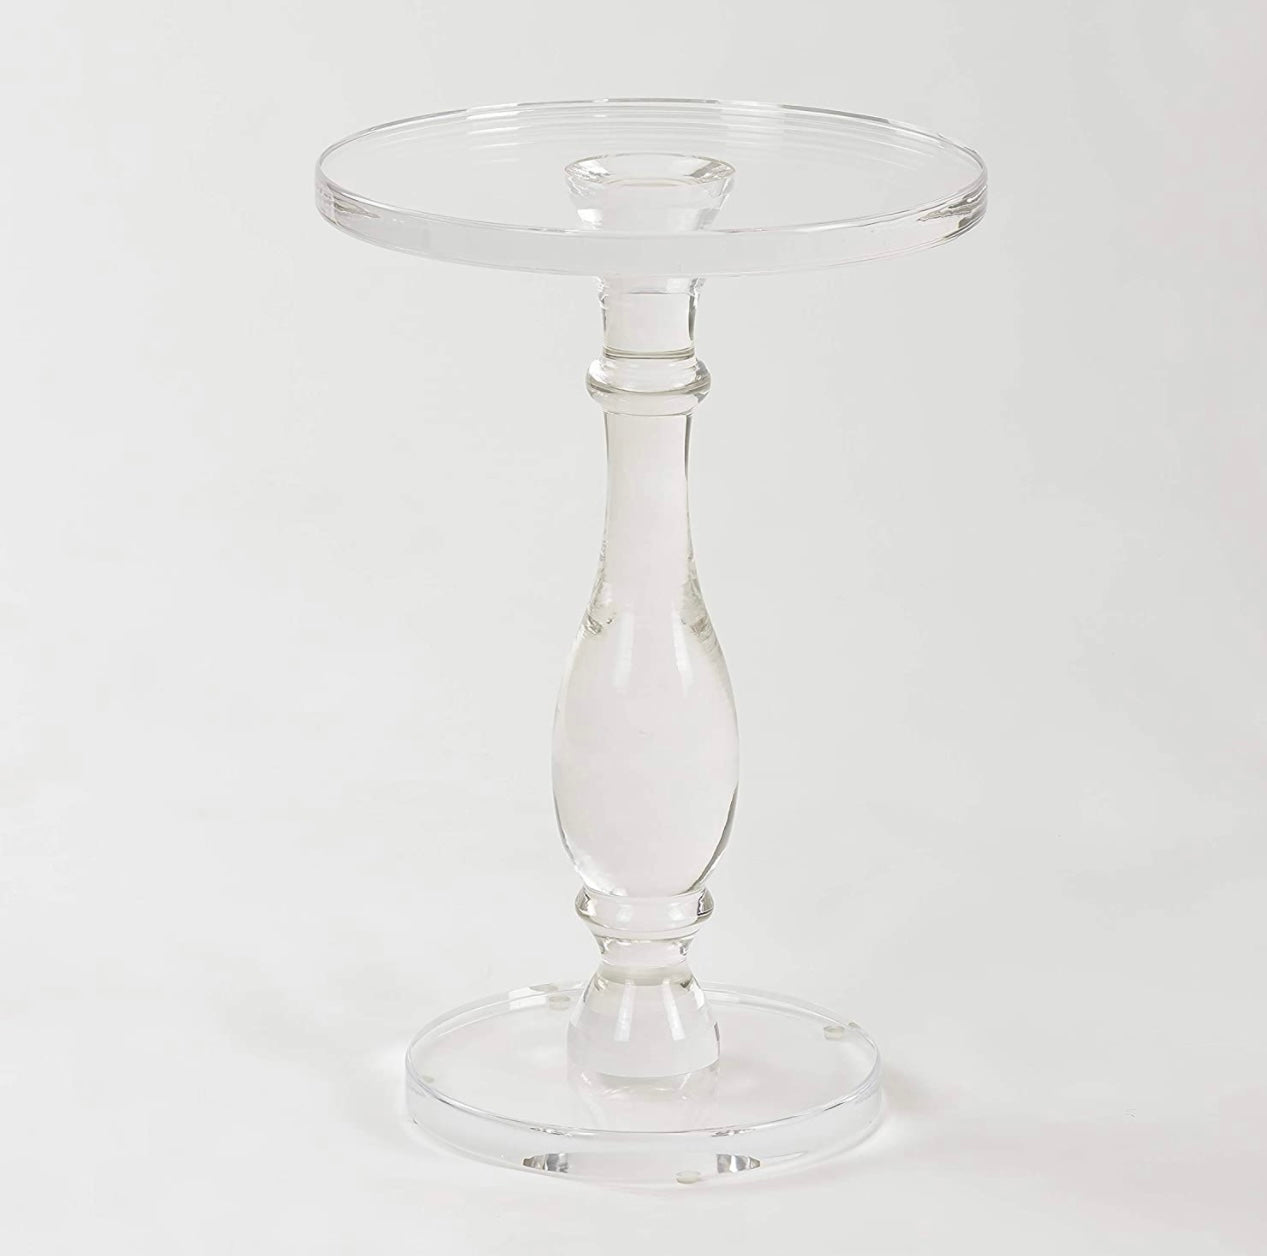 Acrylic pedestal table